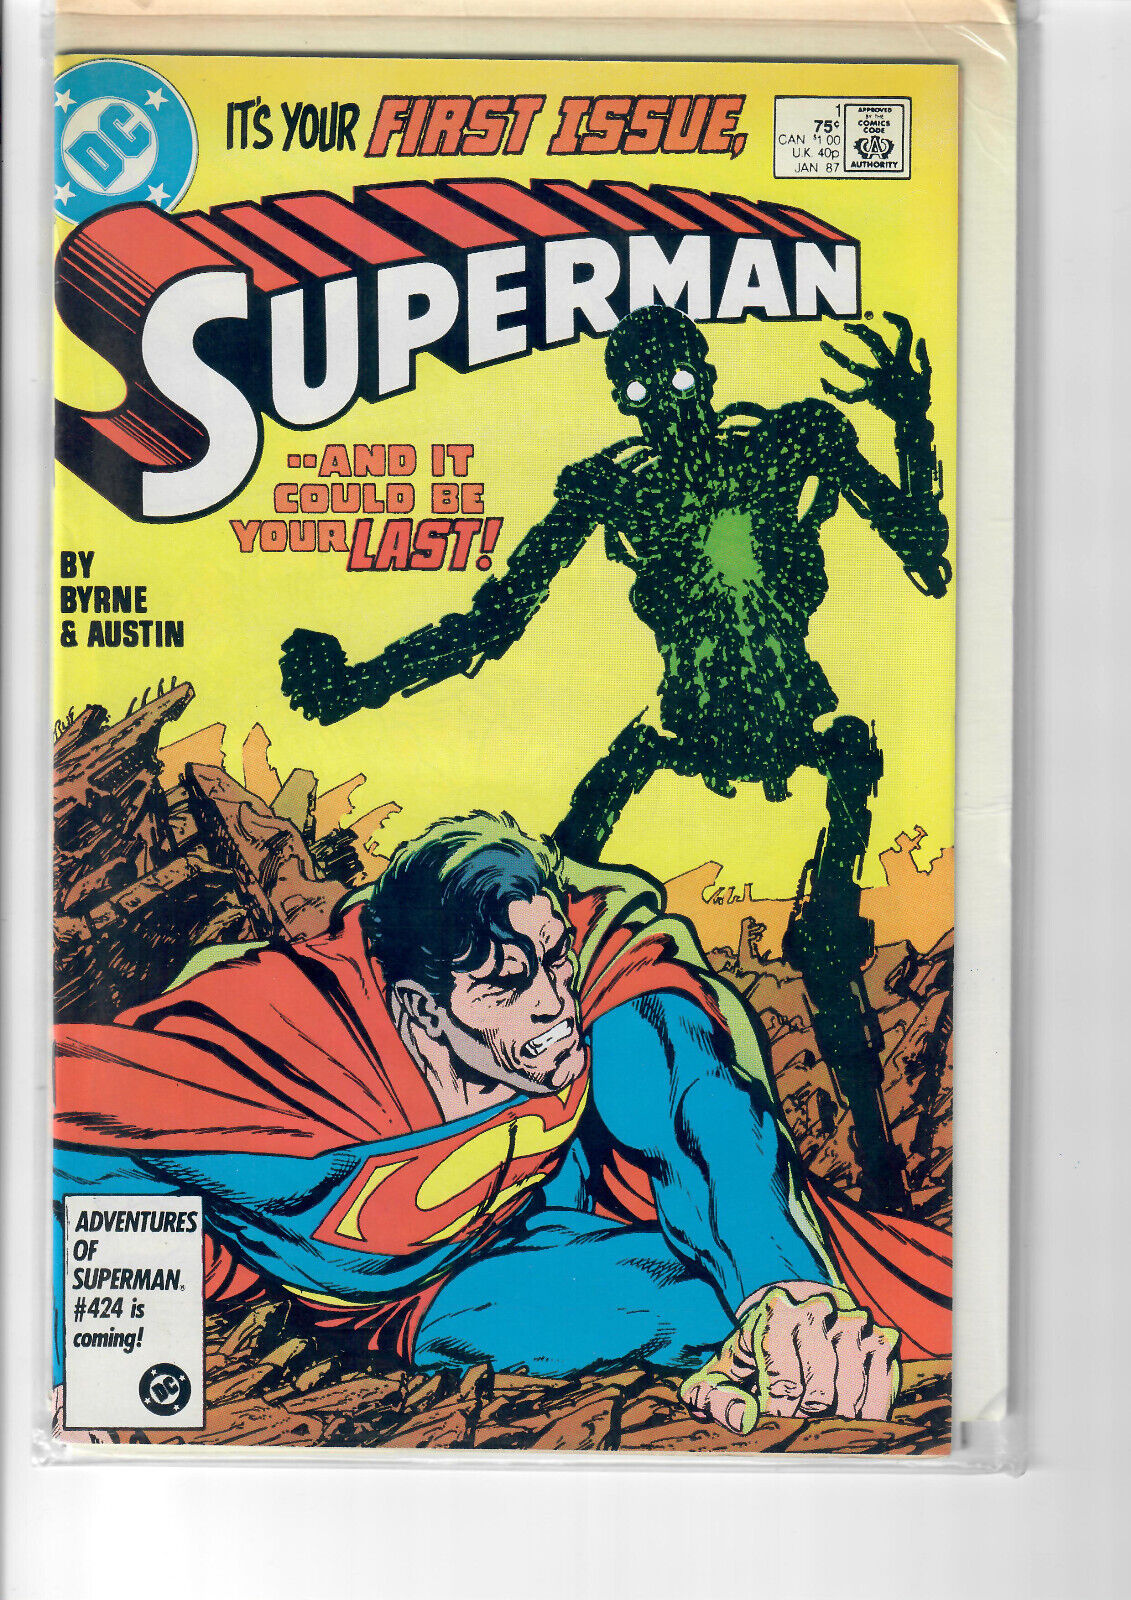 VINTAGE SUPERMAN #1 DC 1987 TITLE REBOOT INTRODUCE NEW METALLO JOHN BYRNE ART NM